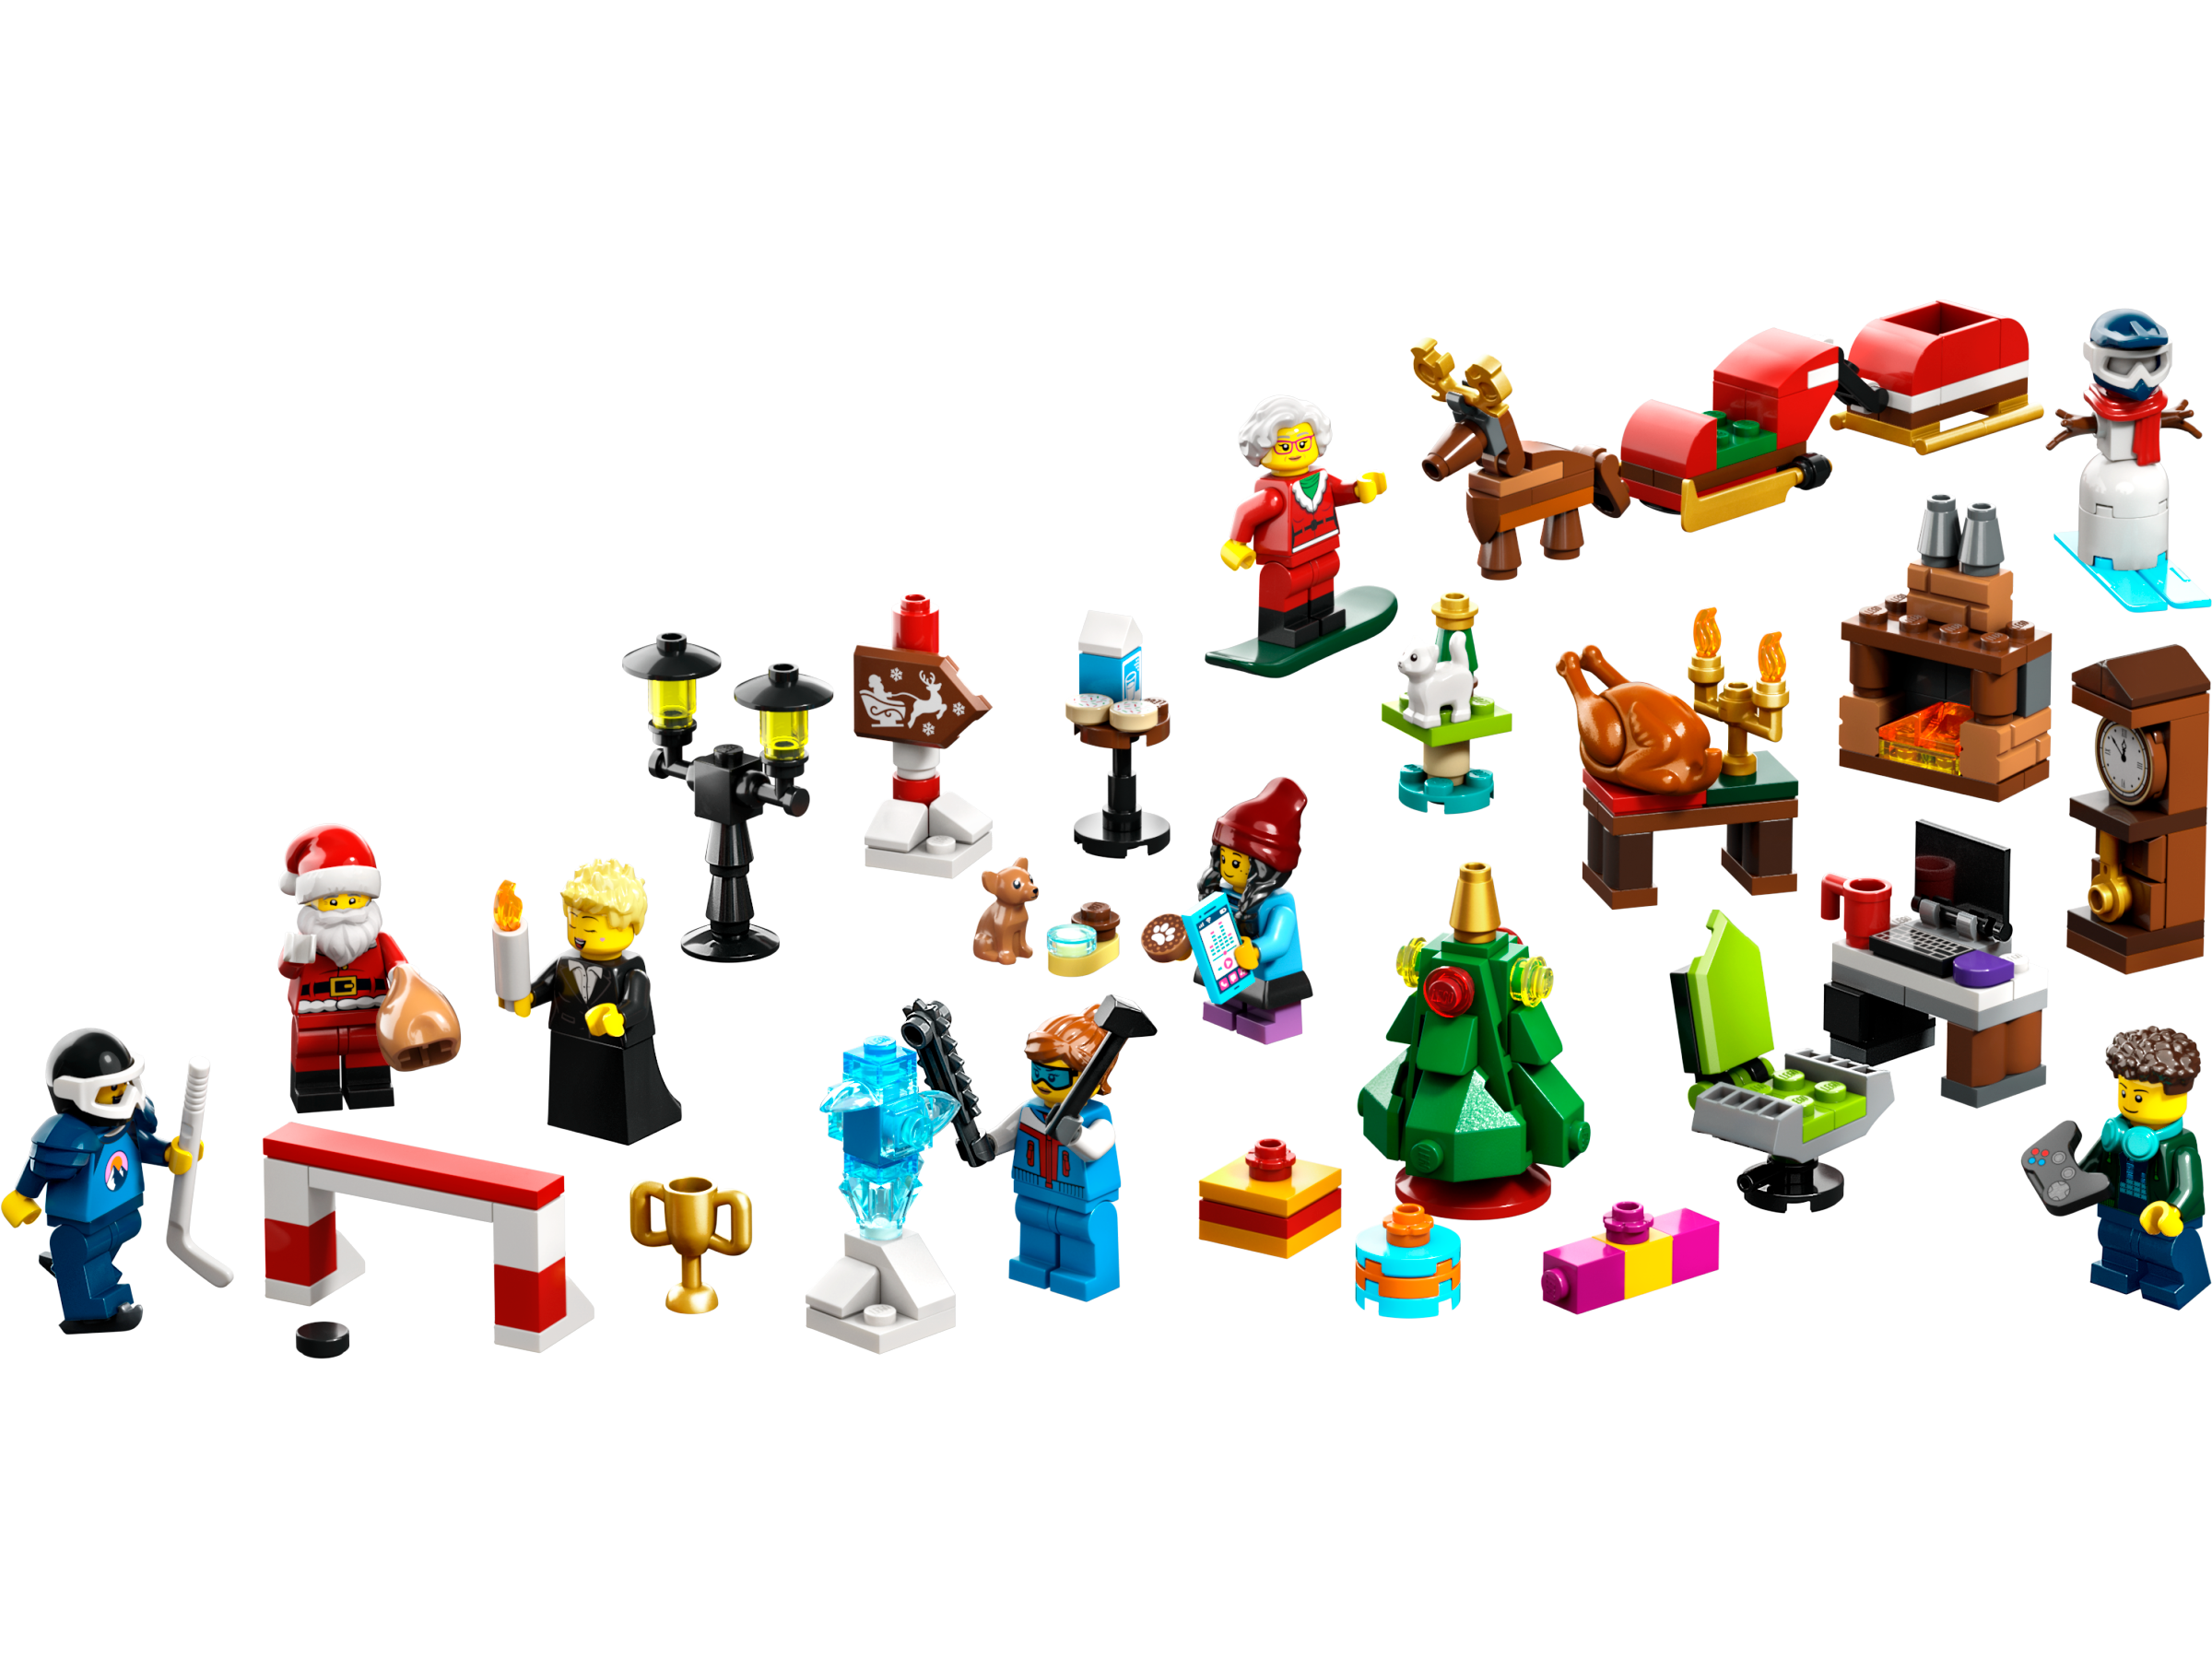 LEGO® City Advent Calendar 2023 60381 City | Buy online the Official LEGO® Shop US